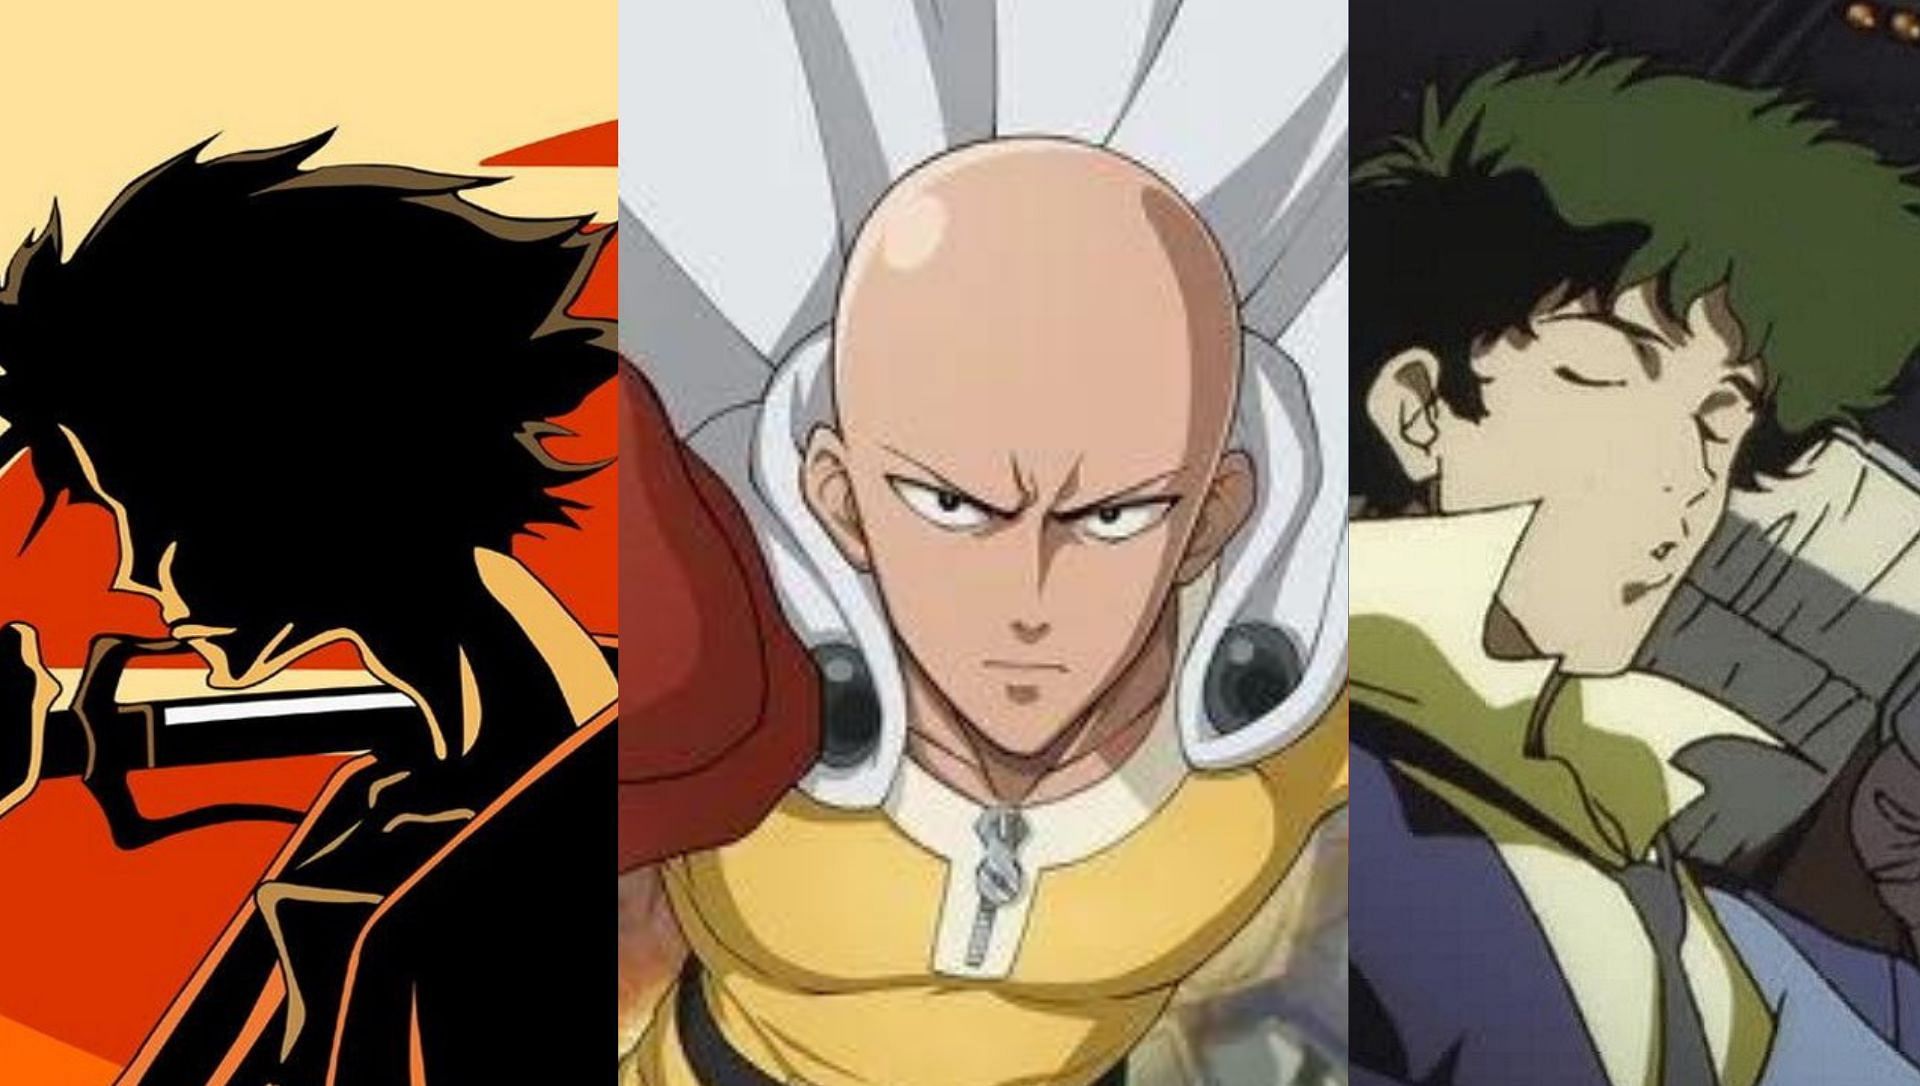 10 Exciting Anime Series Like Jujutsu Kaisen To Binge-Watch